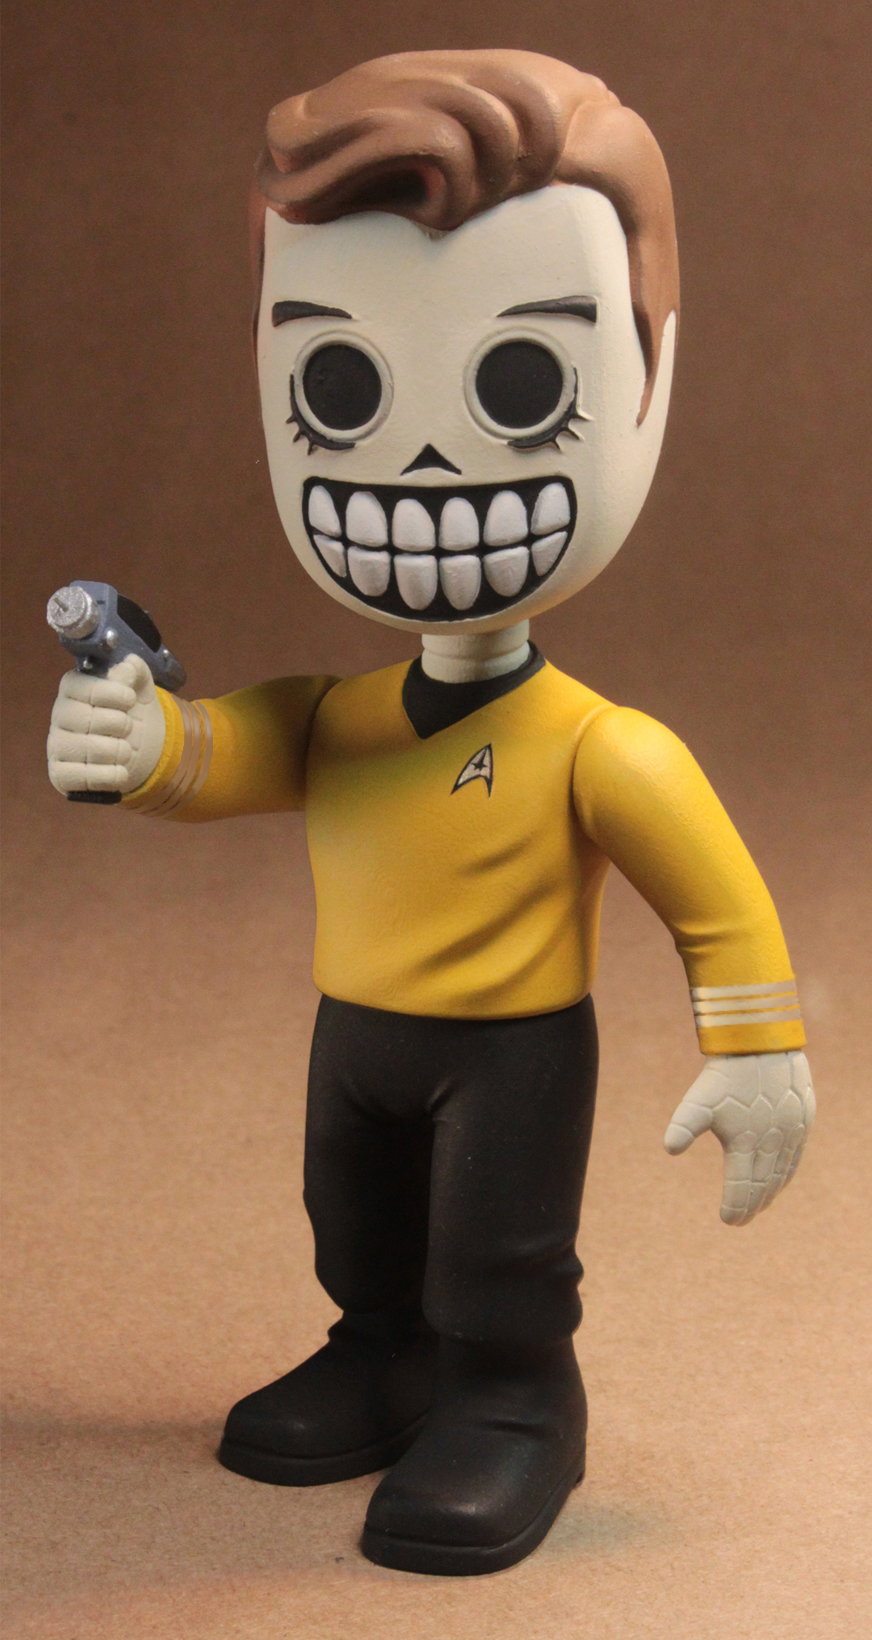 NECA Star Trek Skele-Treks Captain James T. Kirk Figure